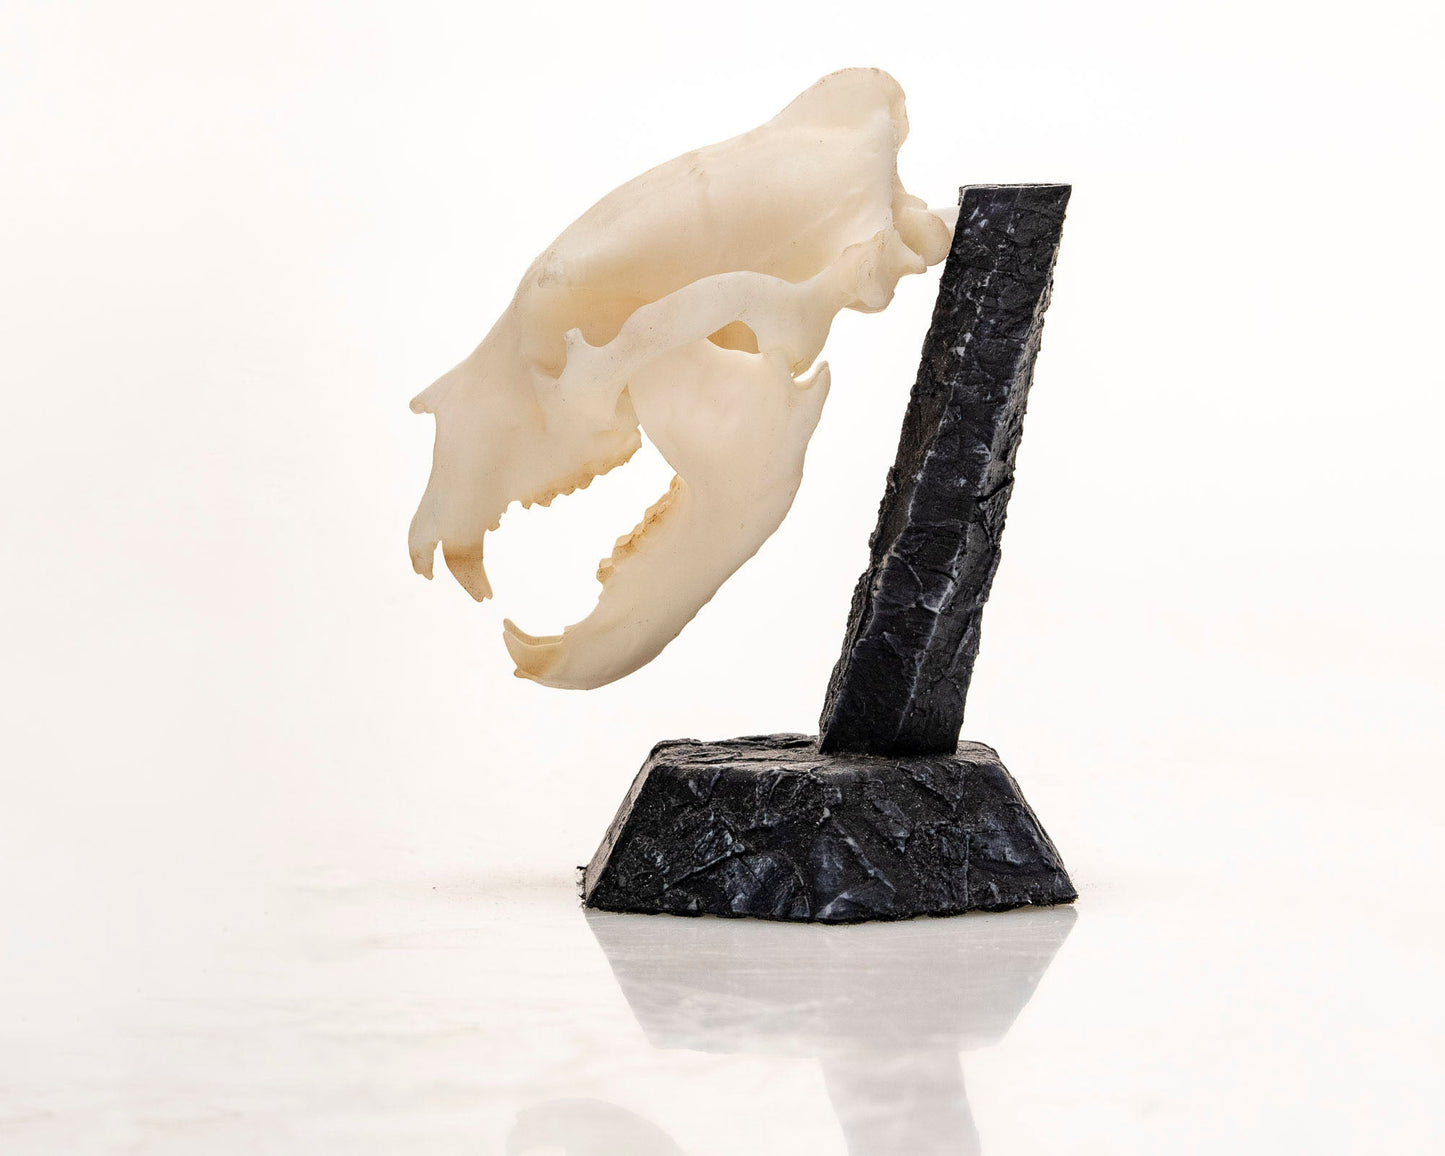 Resin Skullies - Miniature Replica Black Bear Skull